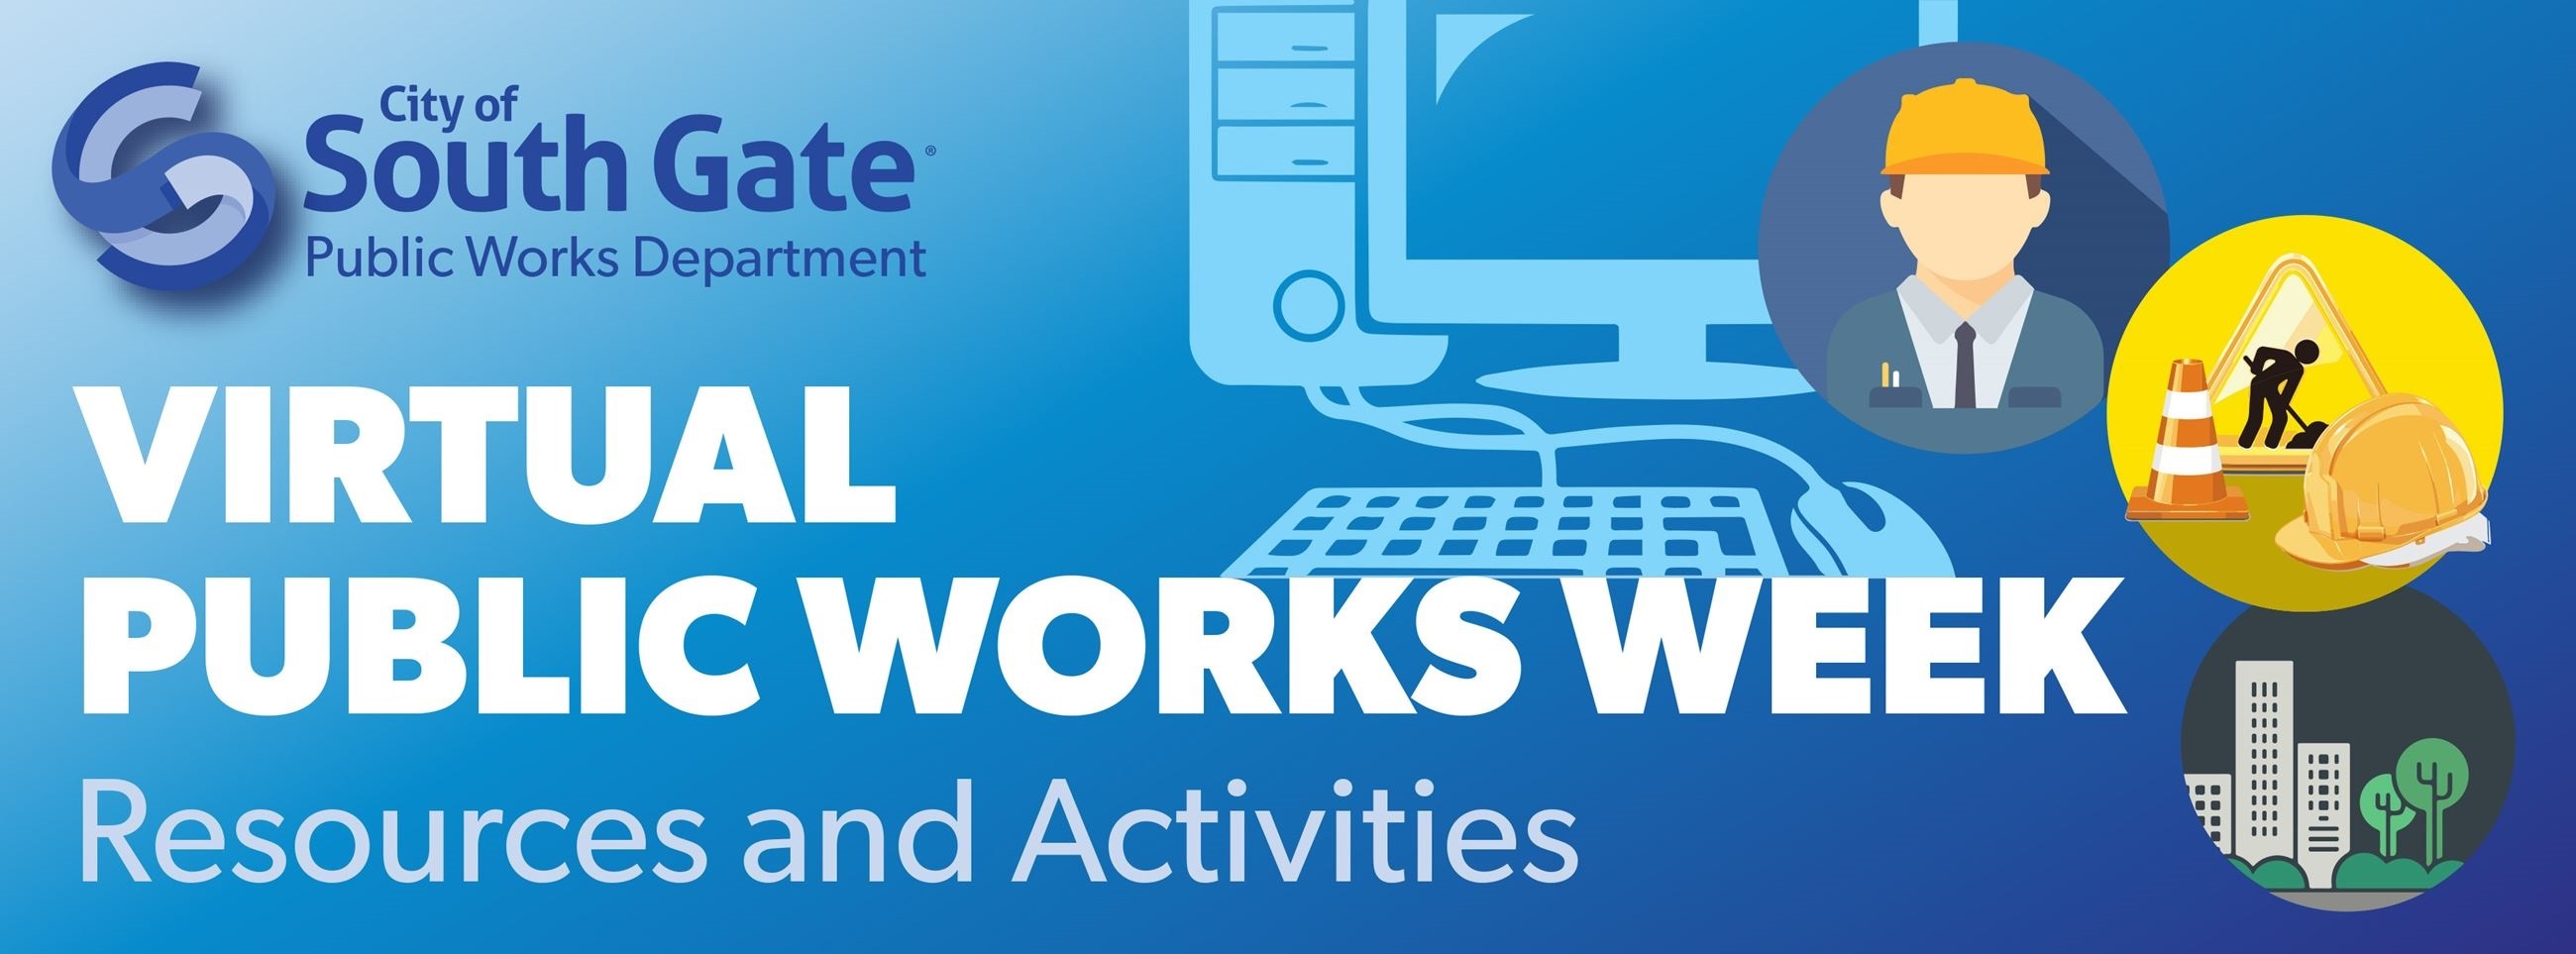 Virtual Public Works Week Web Banner